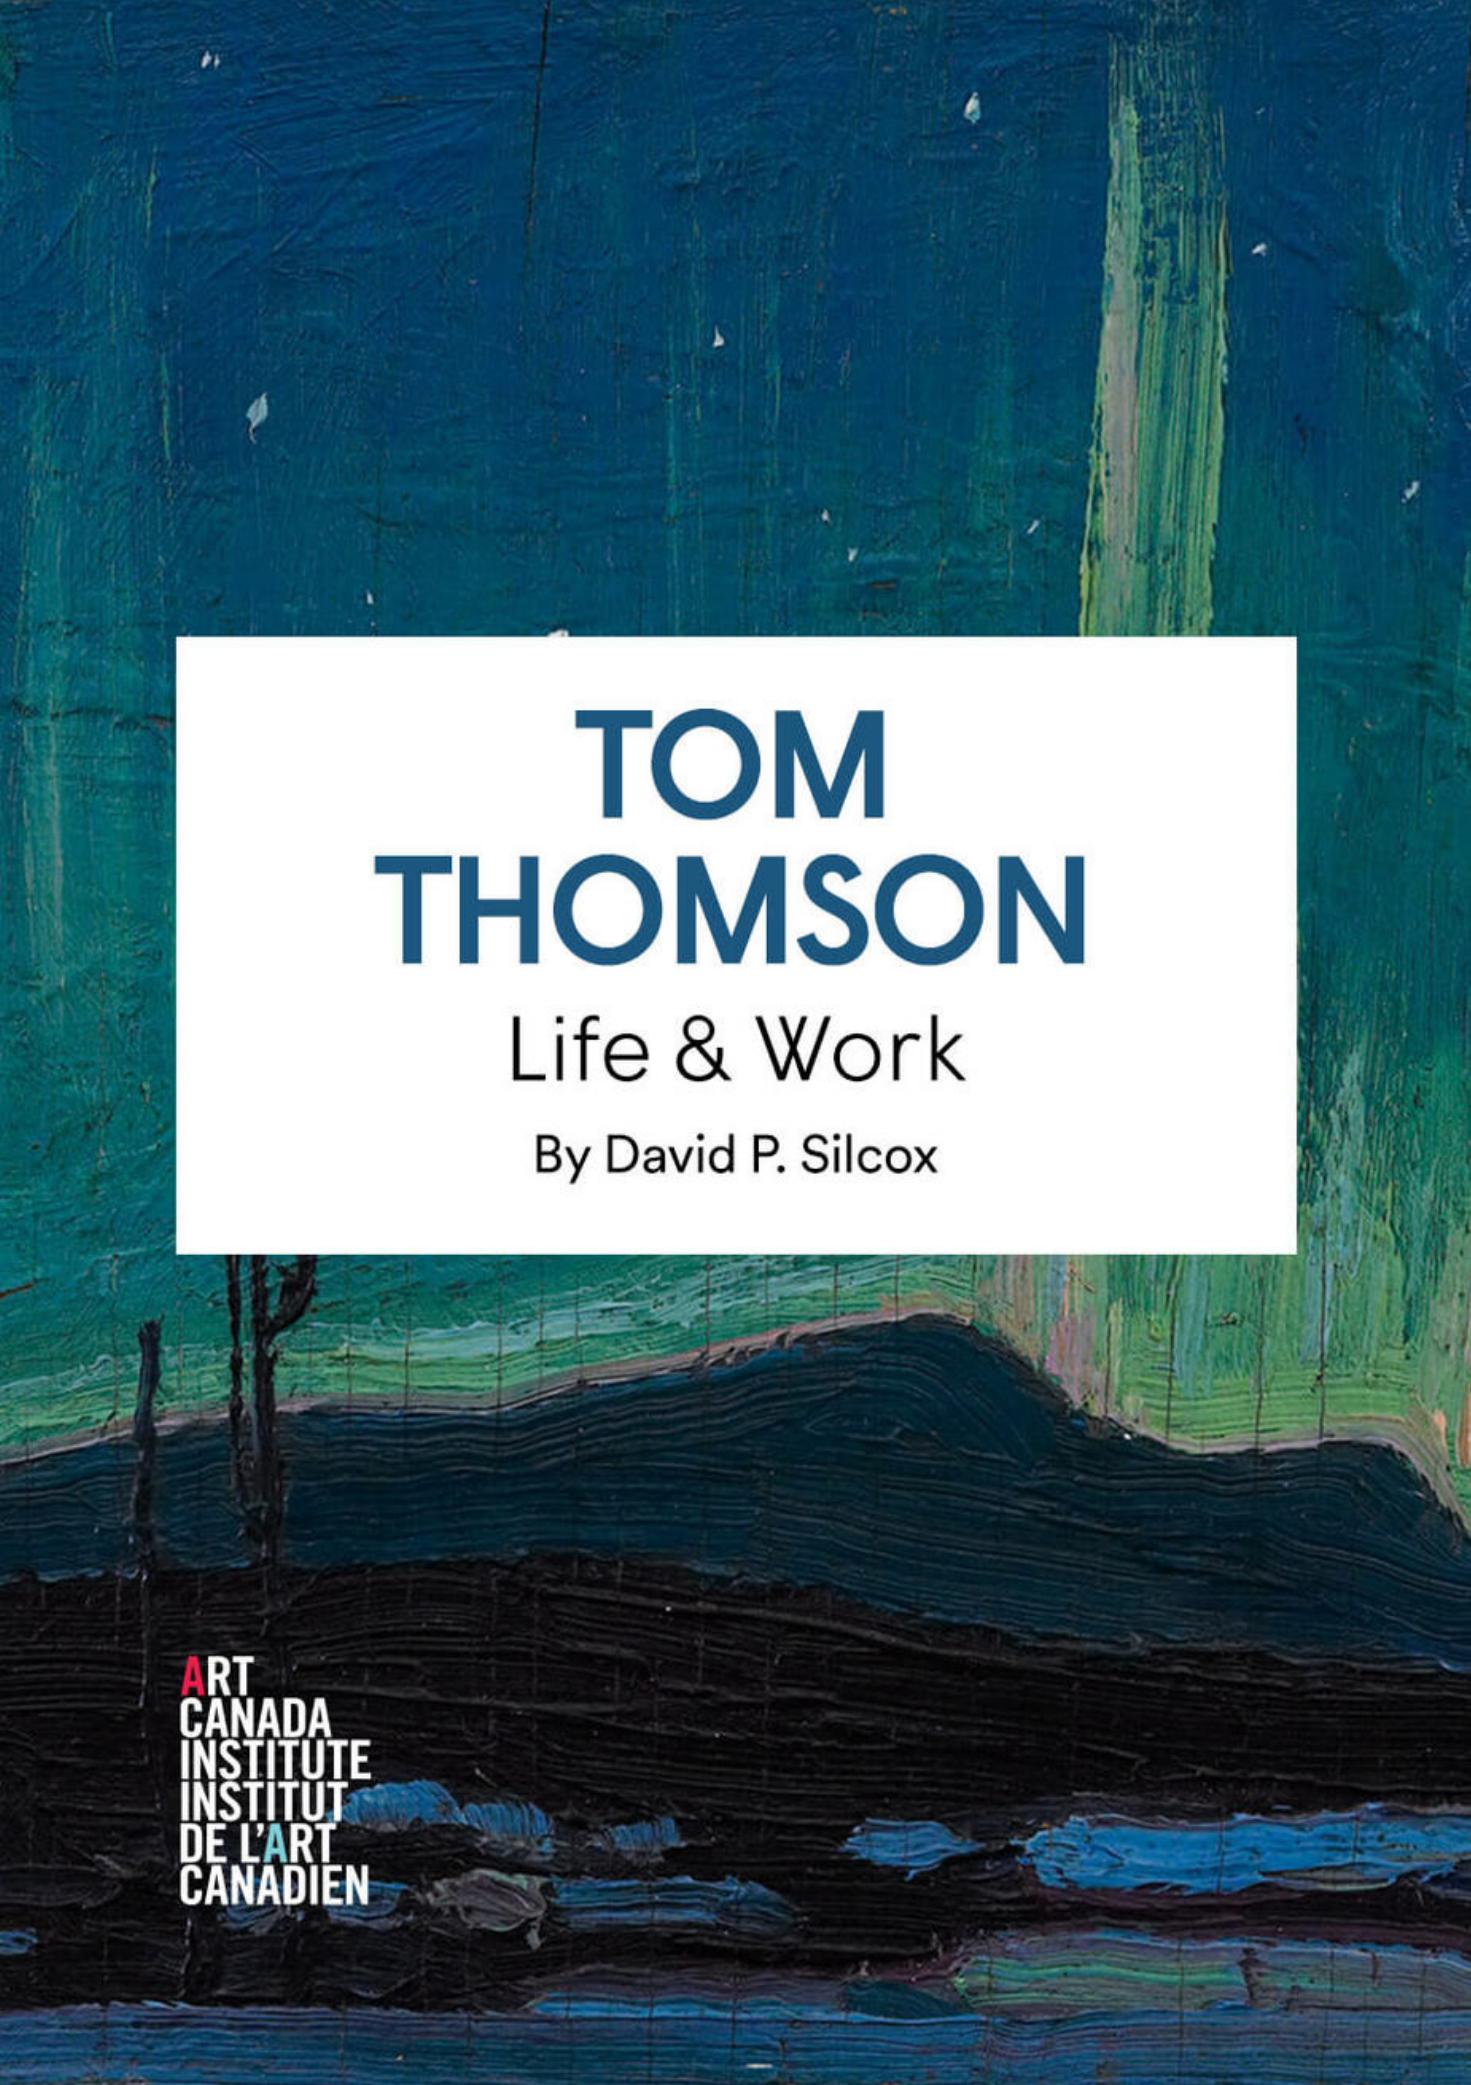 Tom Thomson: Life & Work